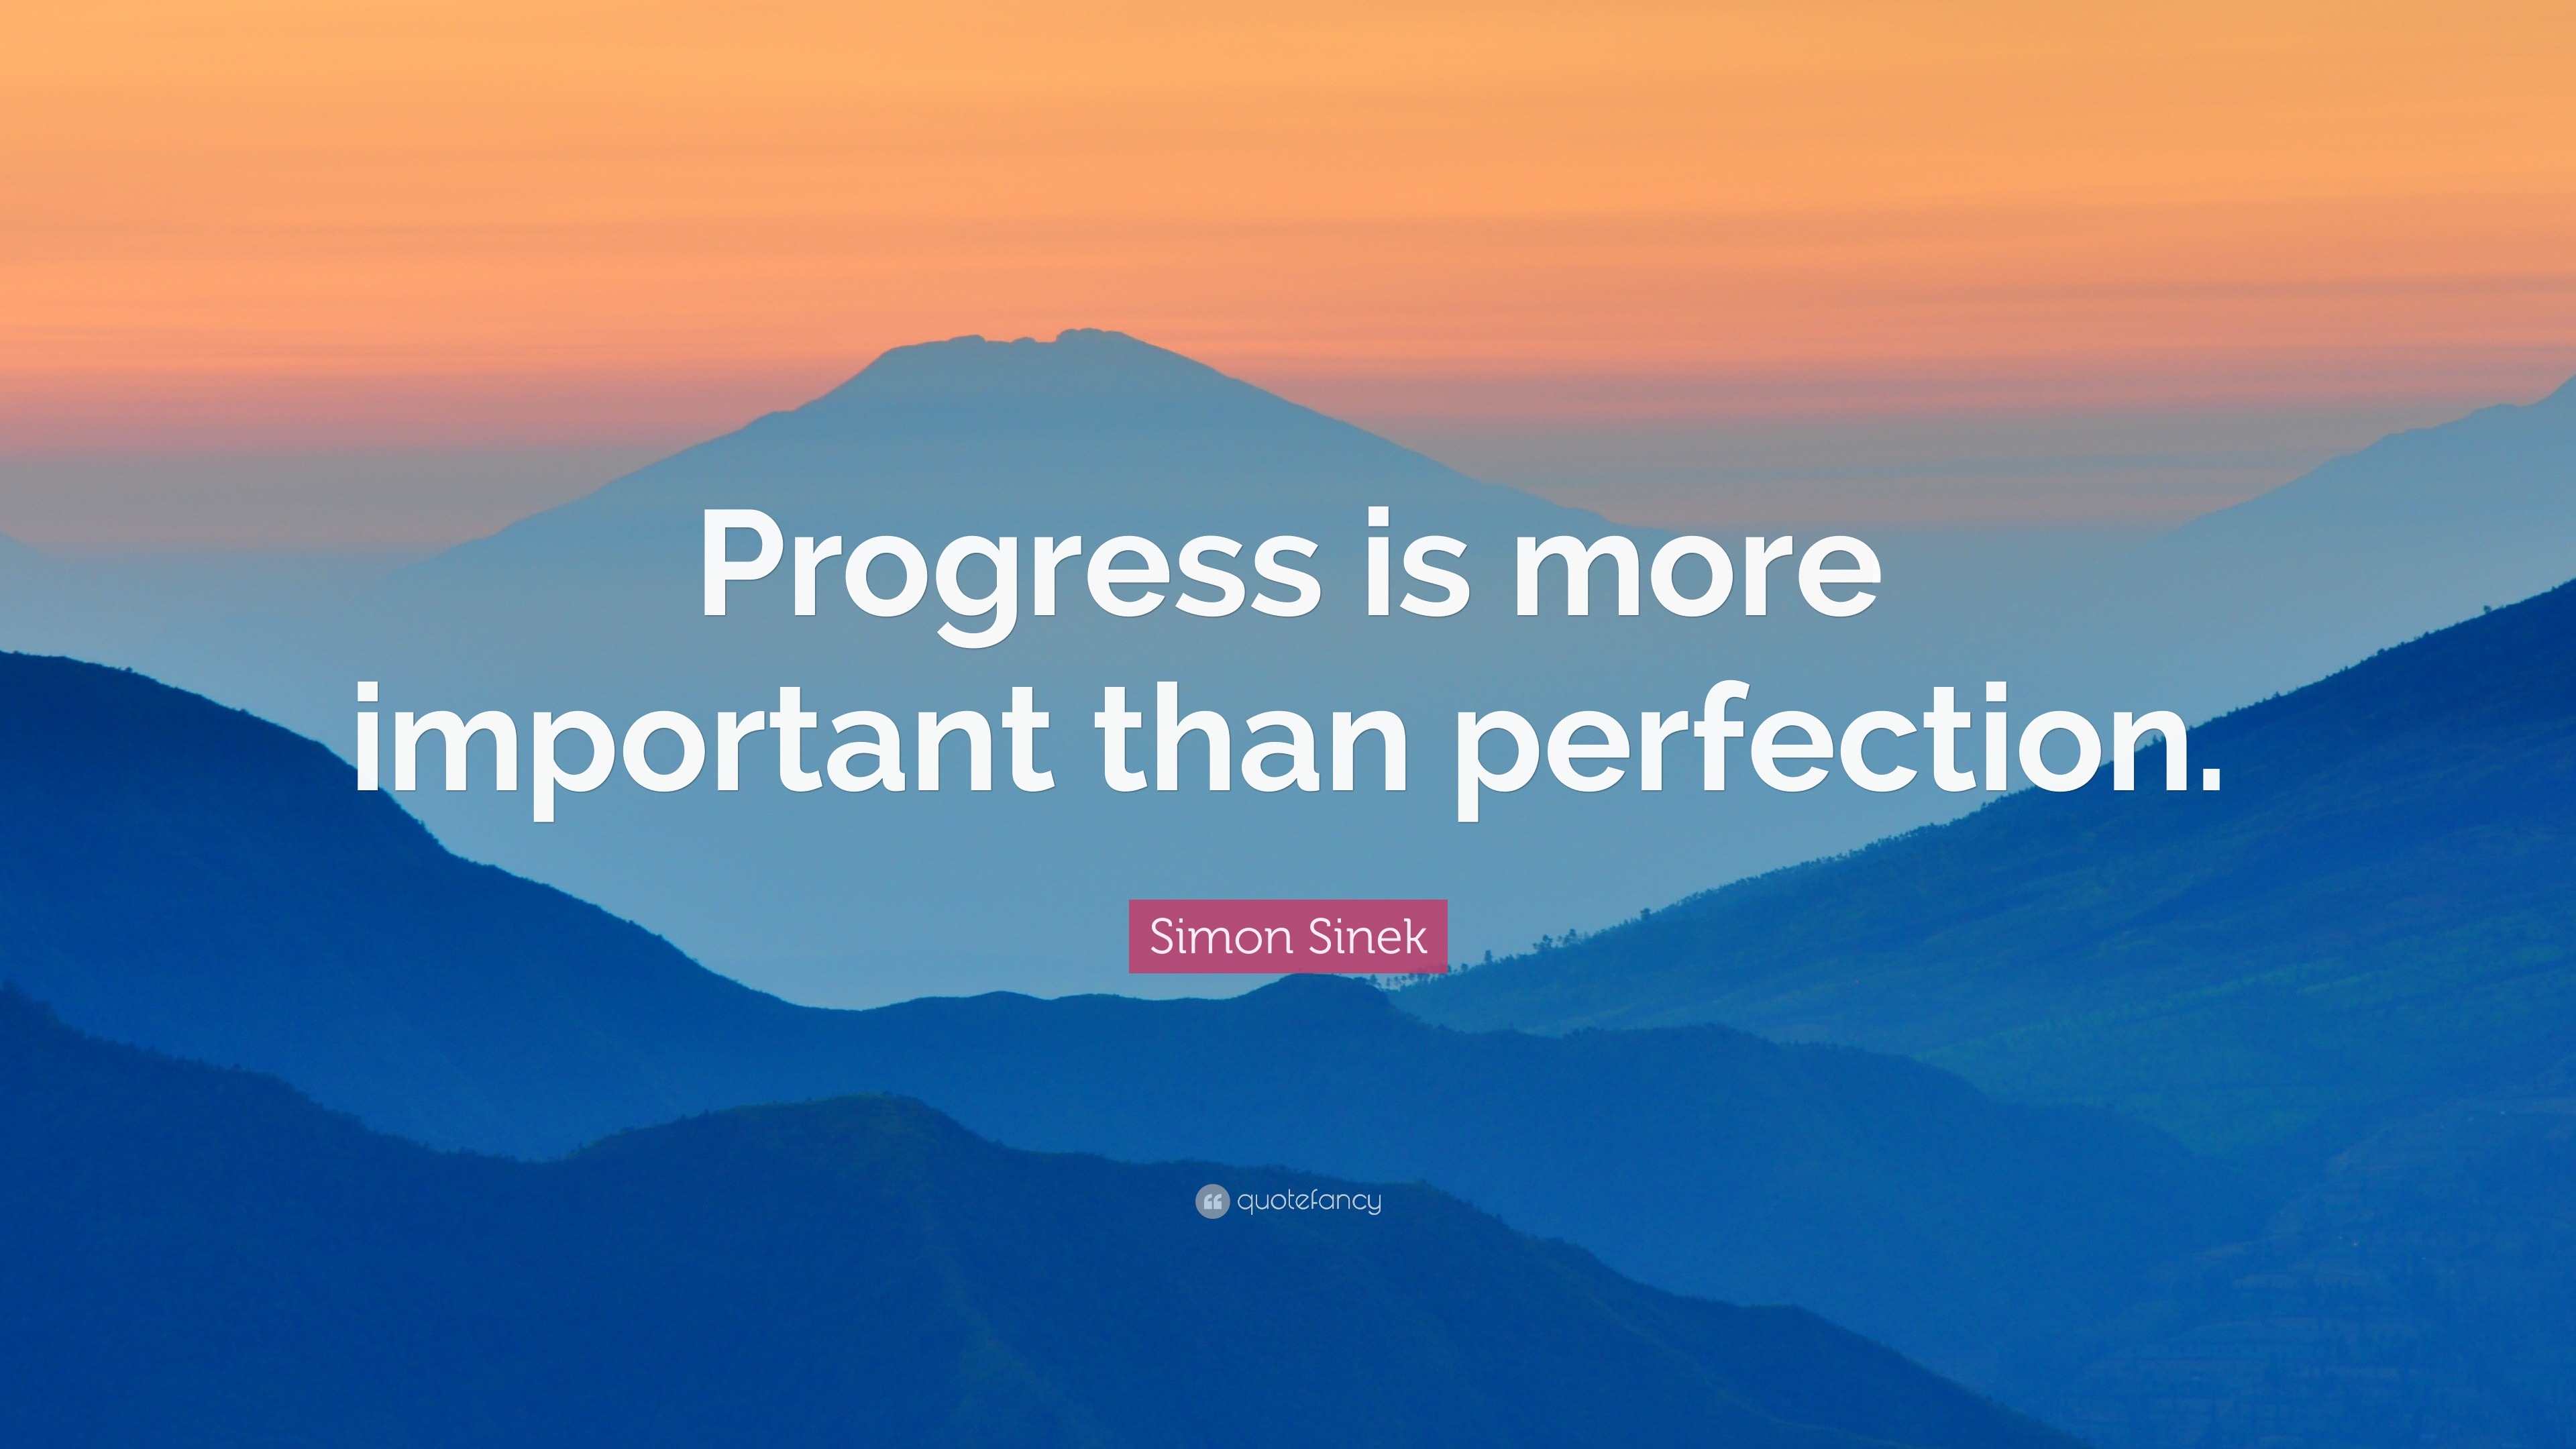 Simon Sinek Quote: “Progress is more important than perfection.”